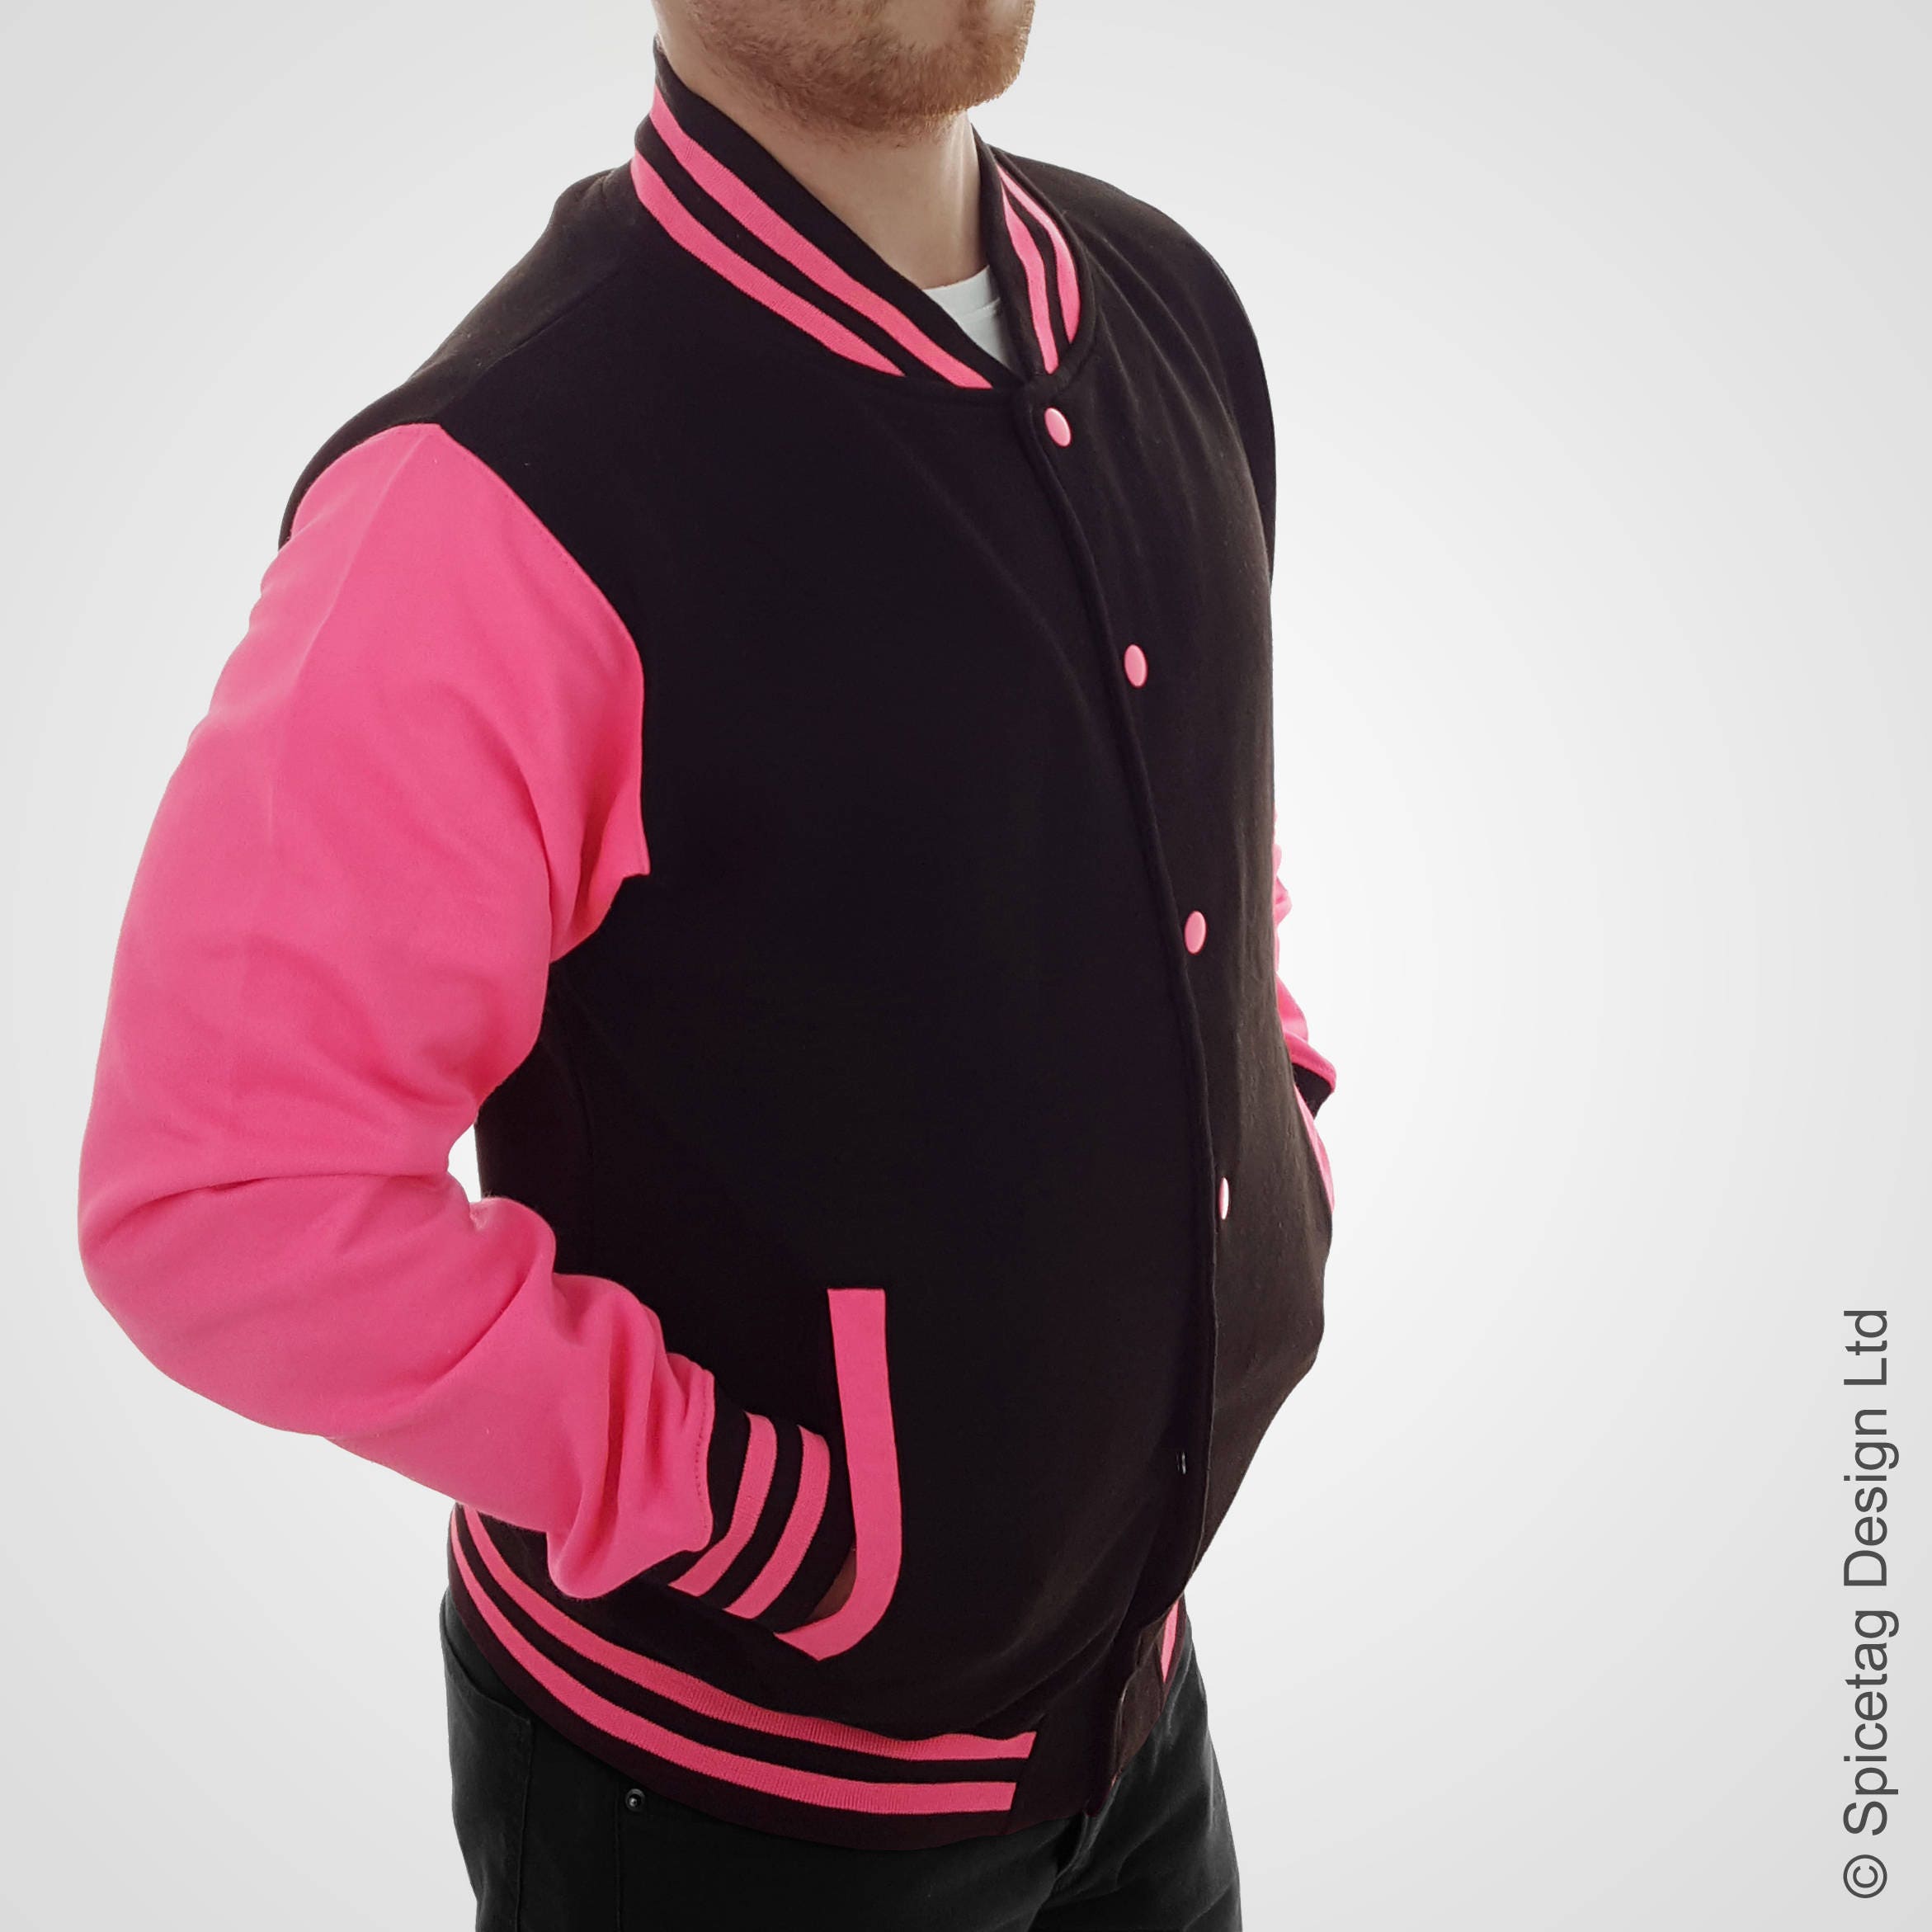 Neon Pink & Black Varsity Jacket Noir College Letterman Coat